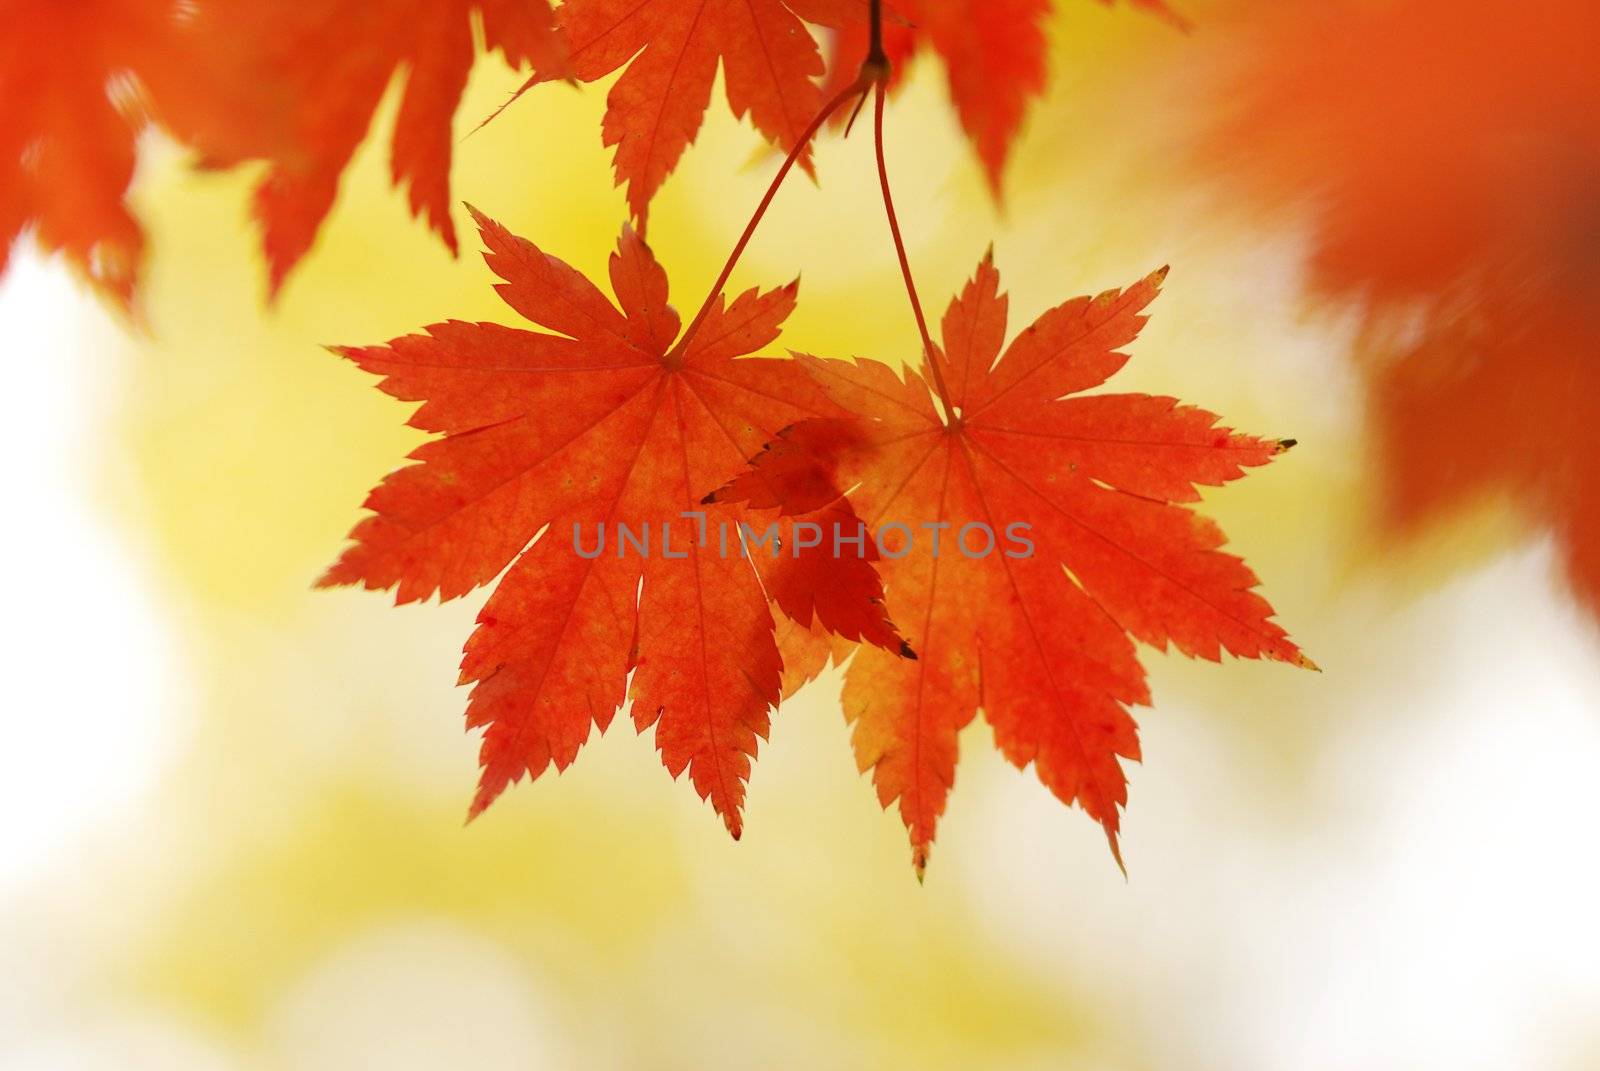 Autumn maple leaves in sunlight